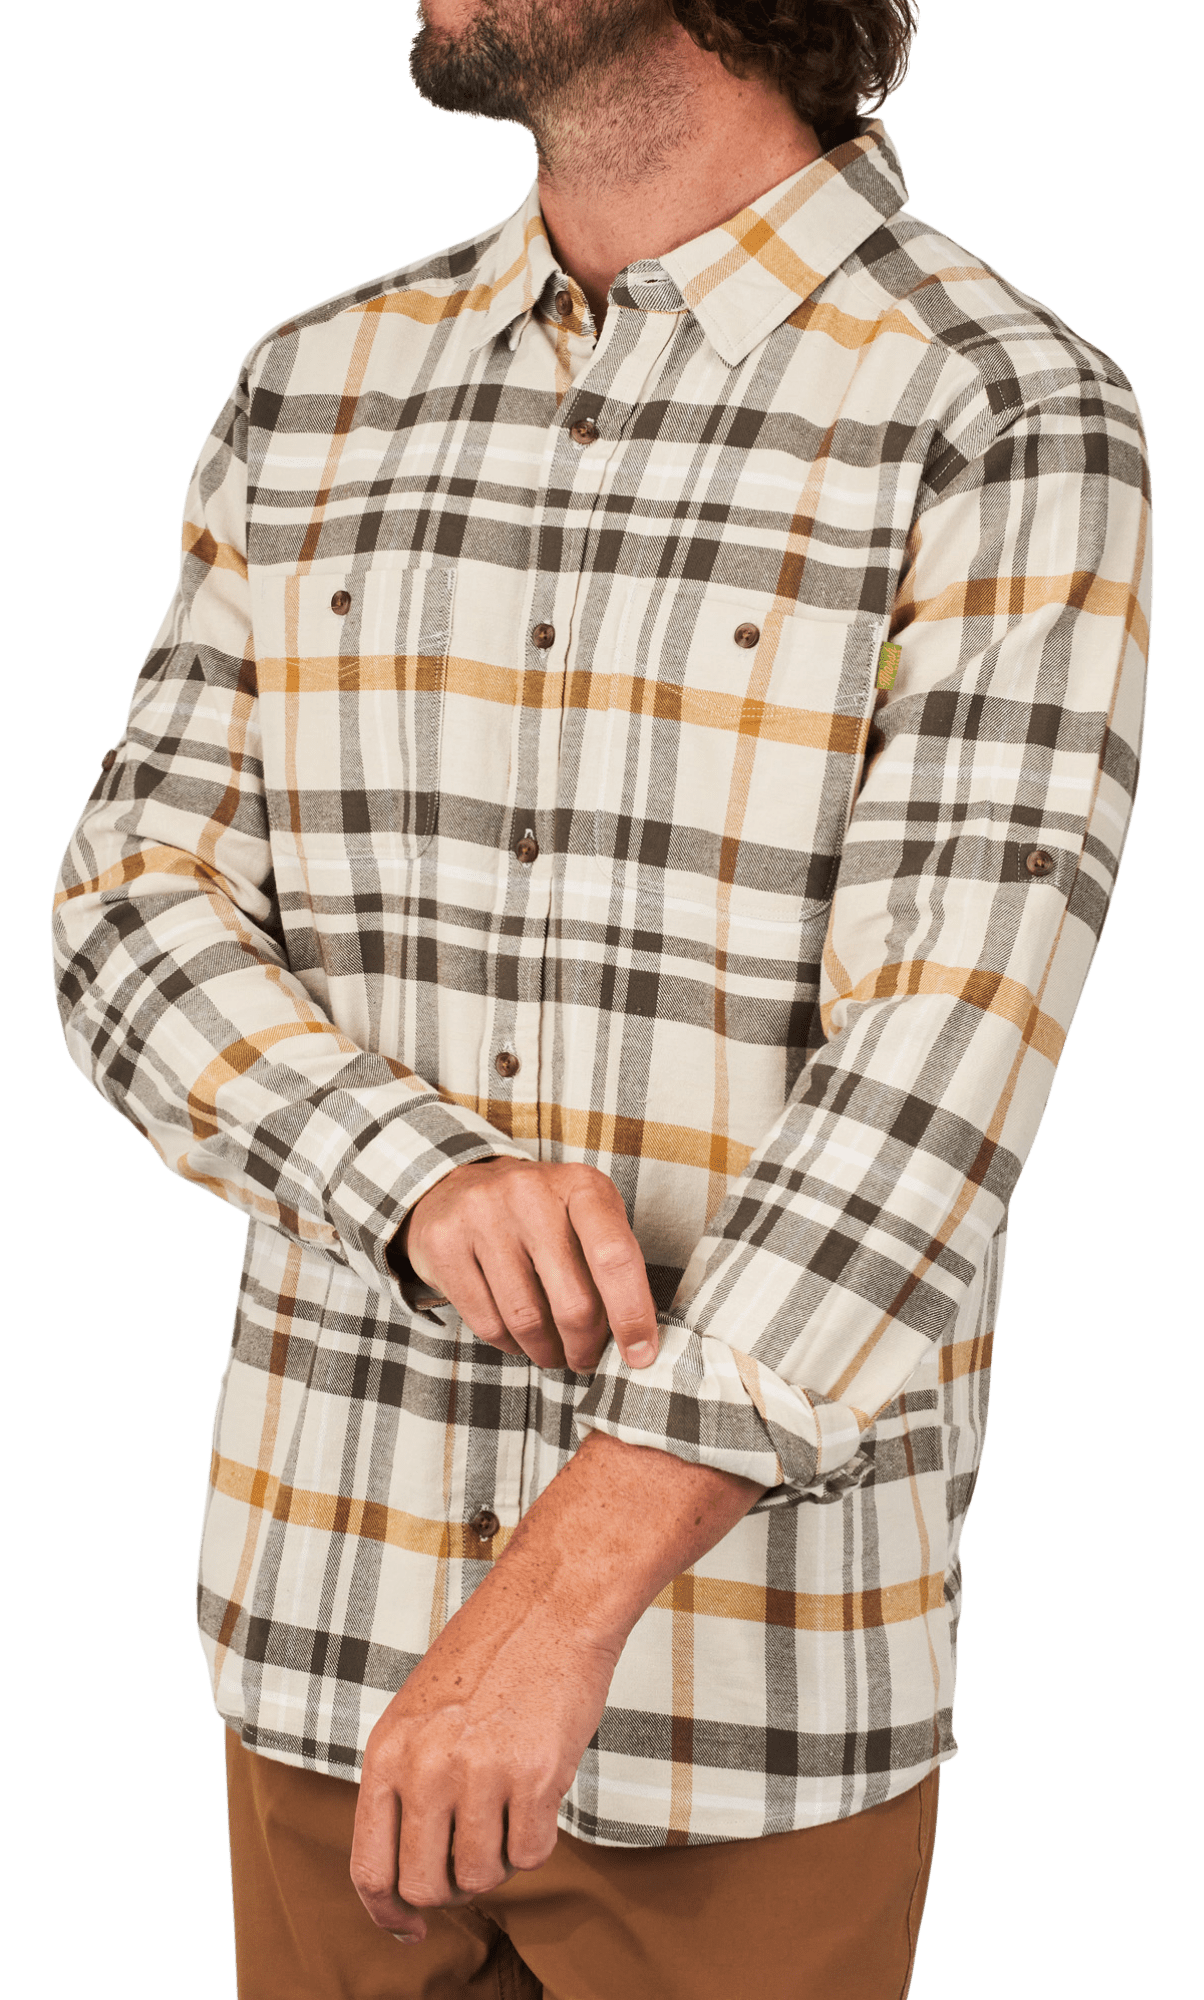 Marsh Wear Westerly Flannel Long-Sleeve Shirt for Men